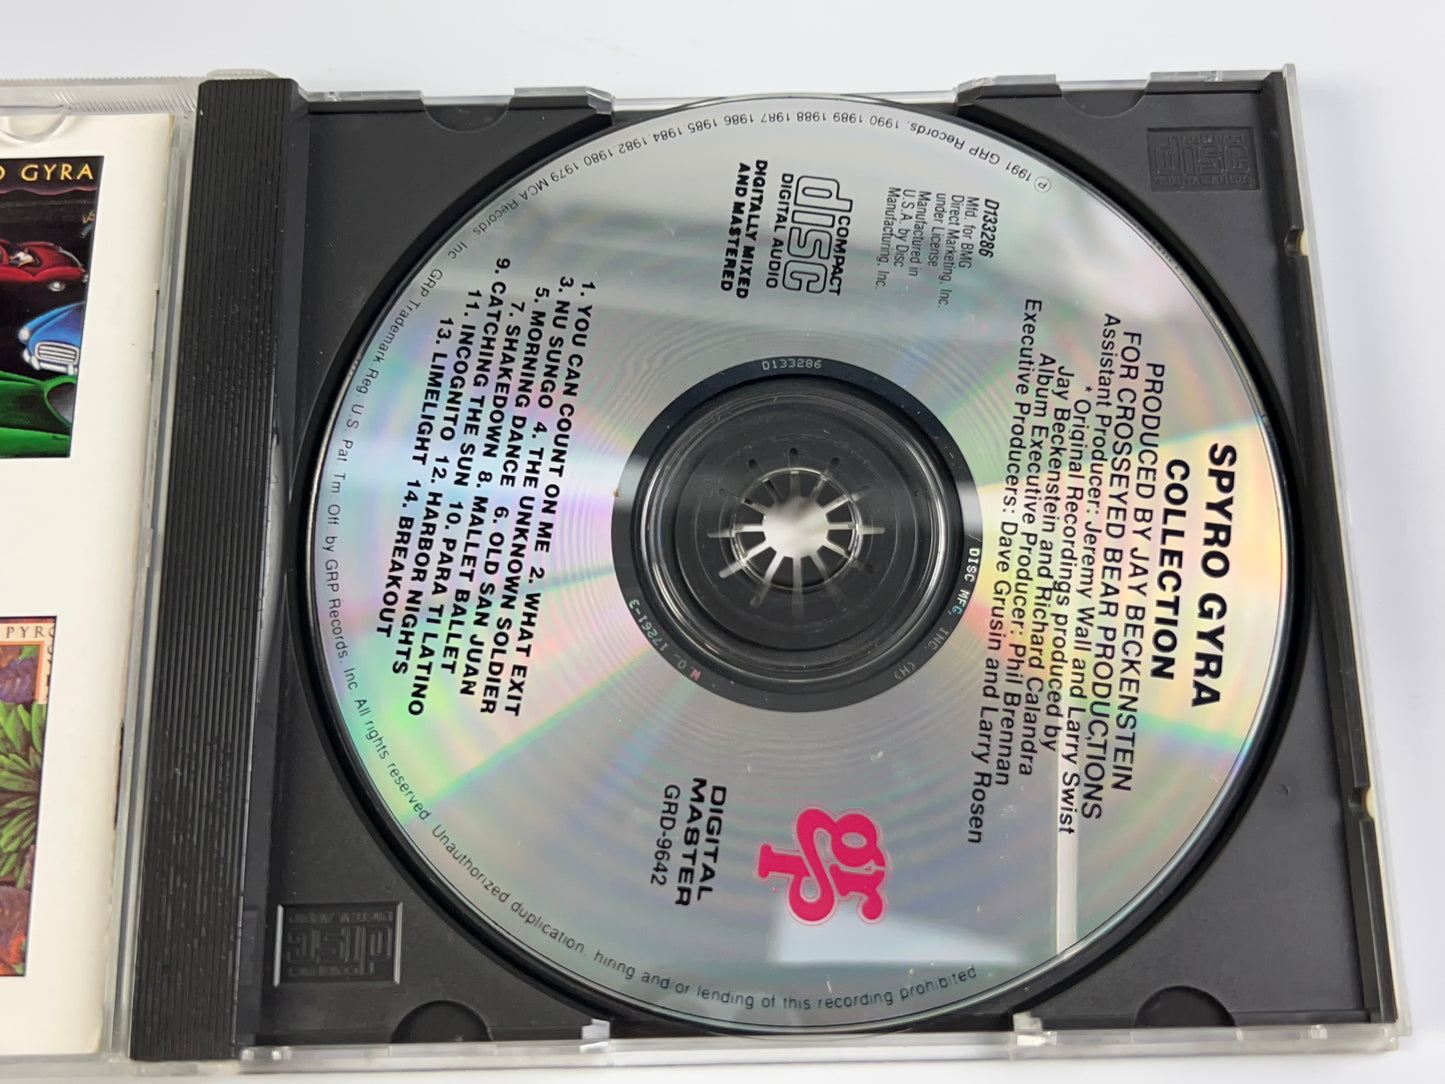 Spyro Gyra: Collection - Audio CD By Spyro Gyra